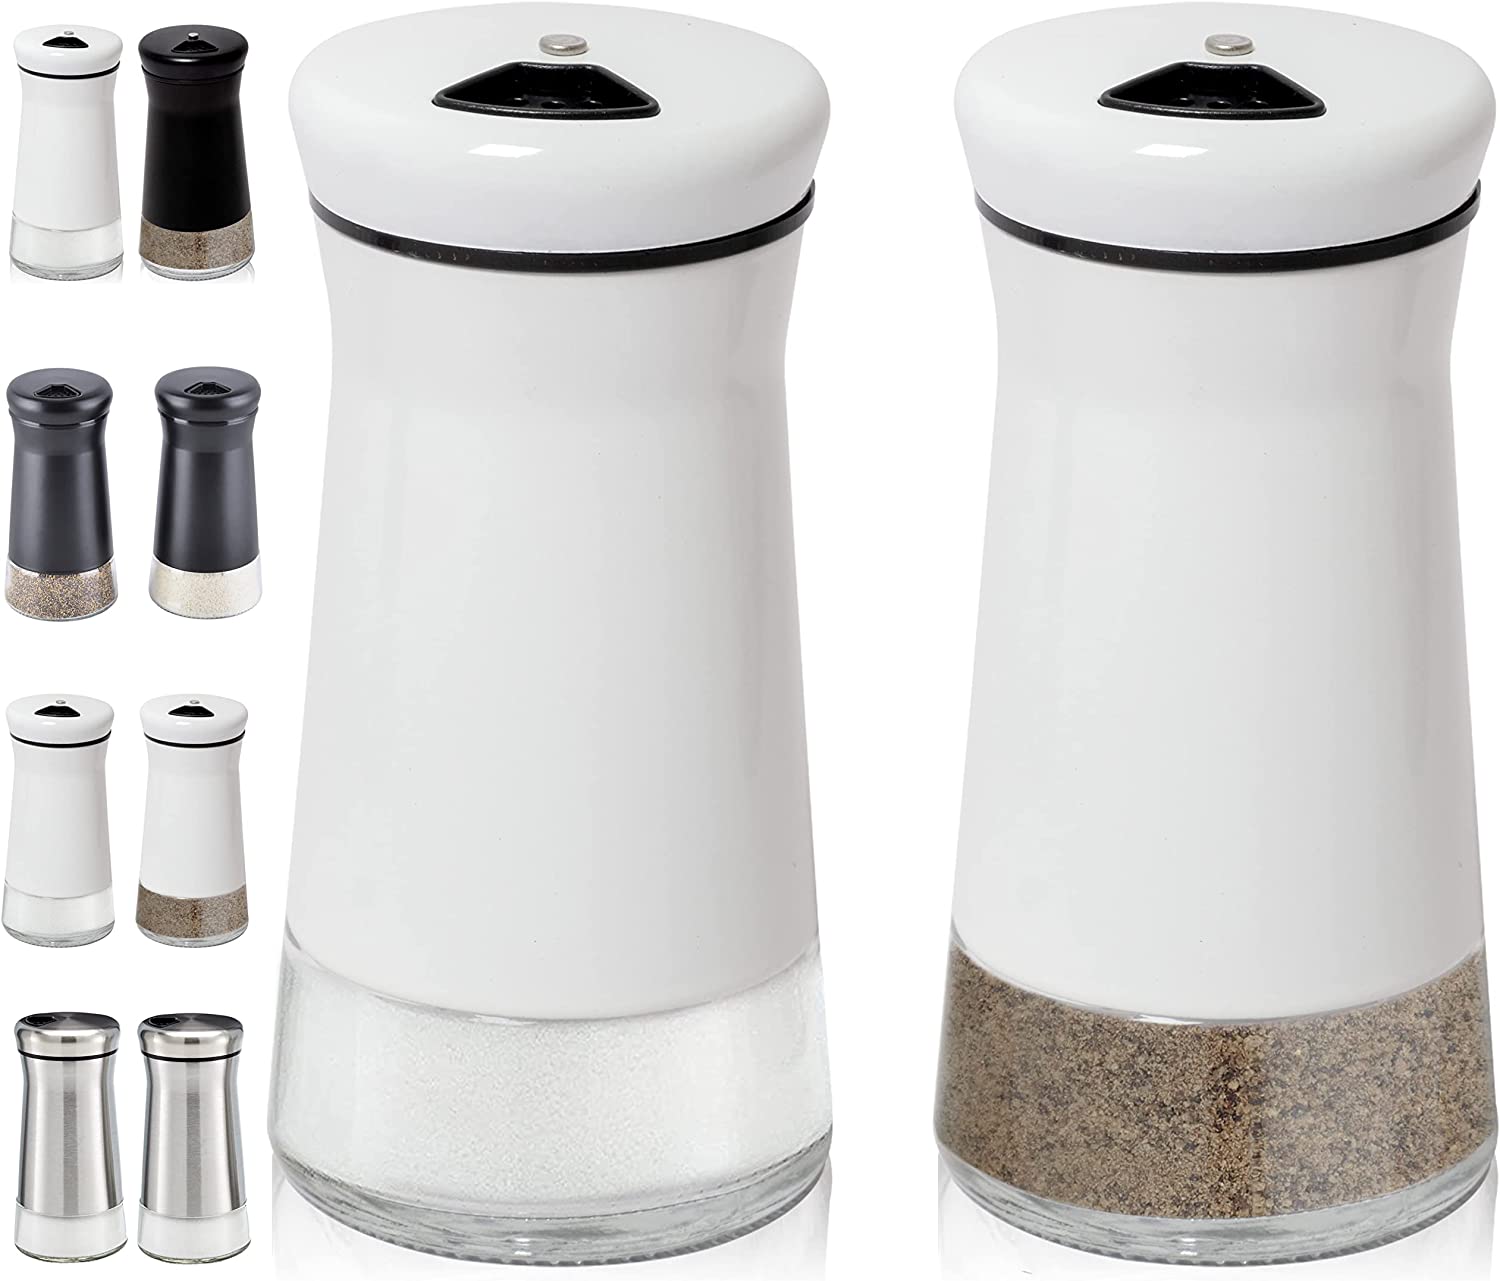 Creative Salt and Pepper Shakers, MySpicer